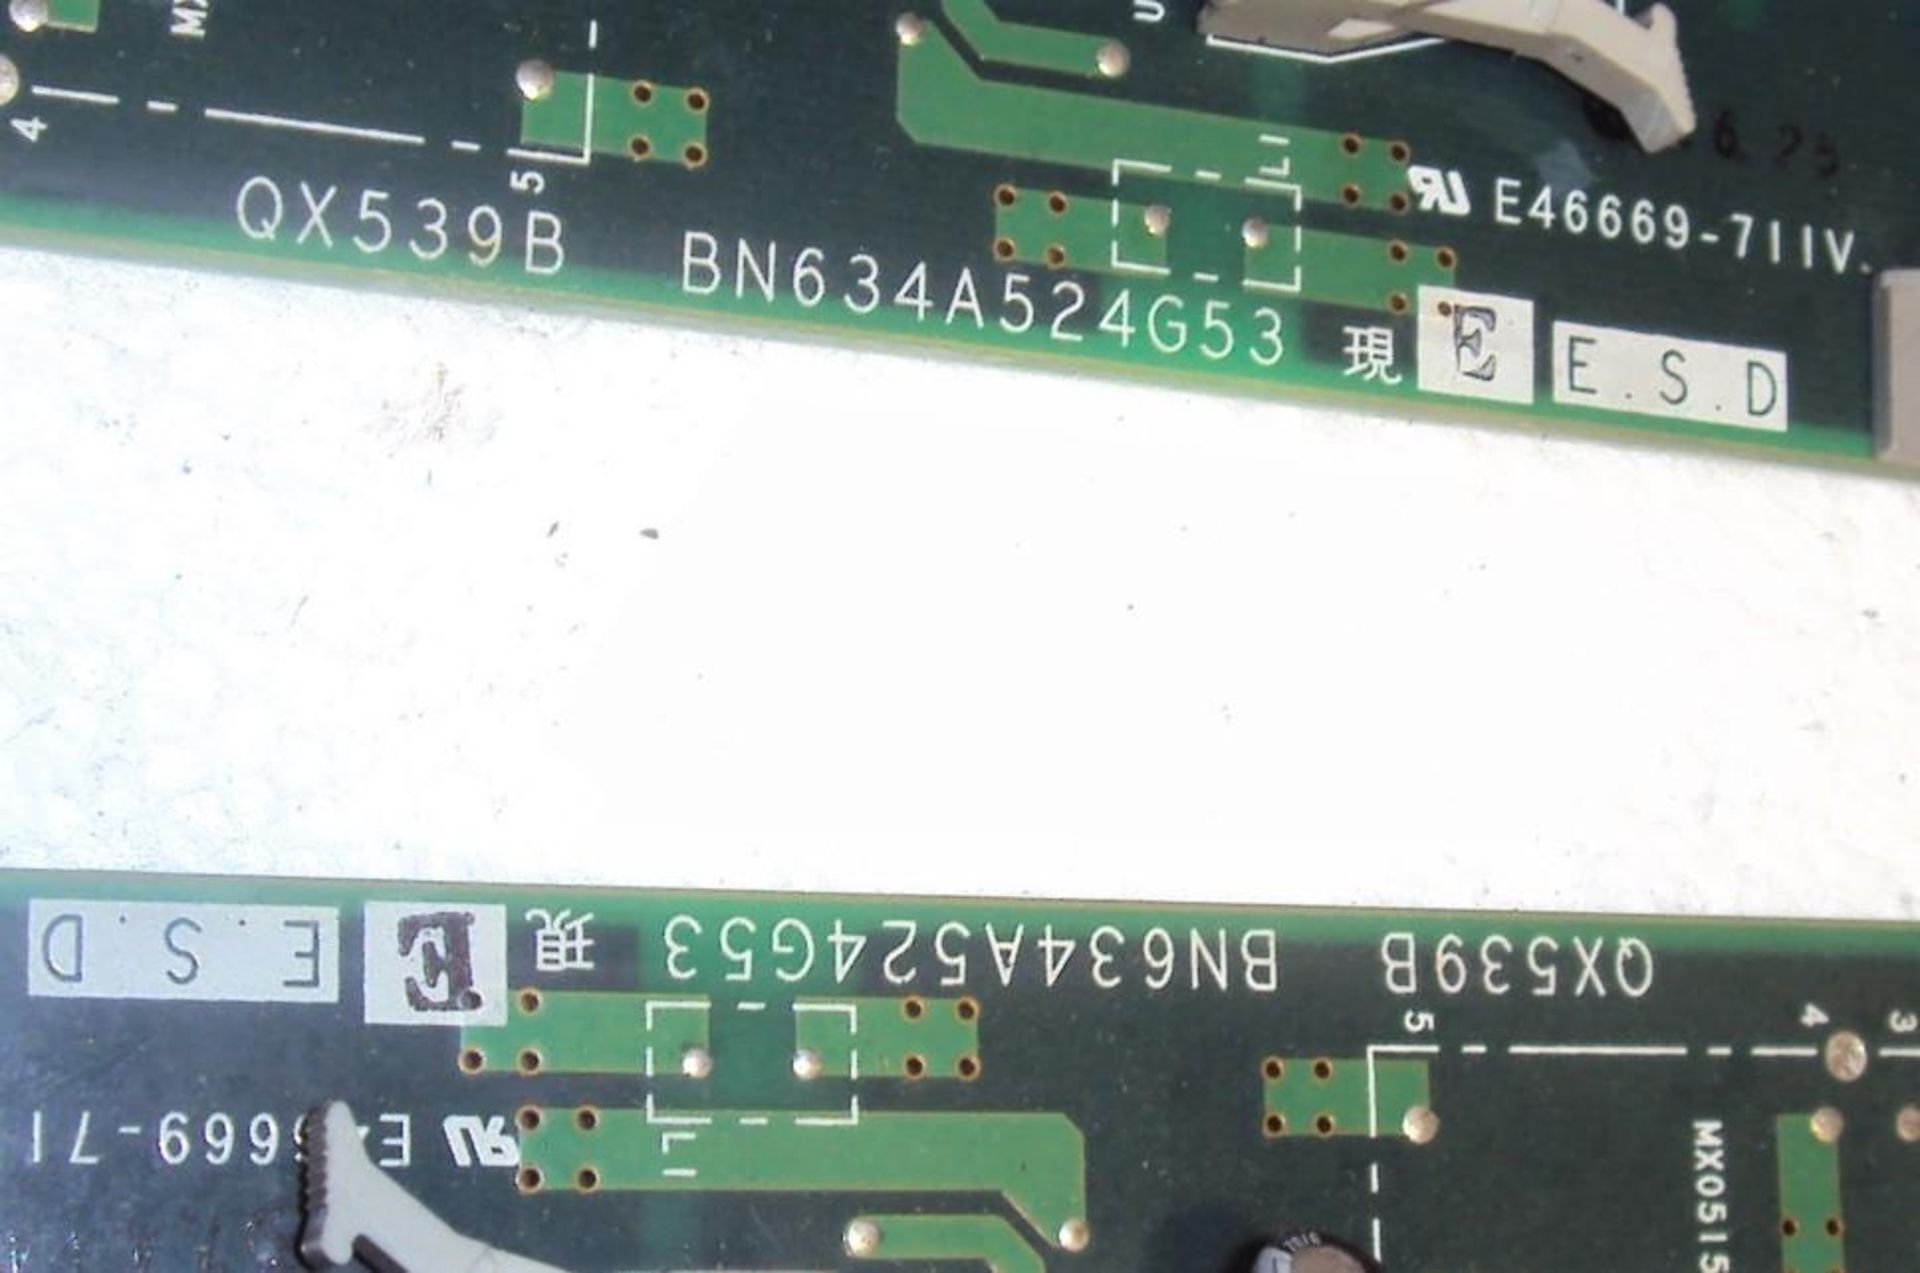 (2) Mitsubishi Meldas Qx539B I/O CNC Control Board BN634A524G53 - Image 4 of 4